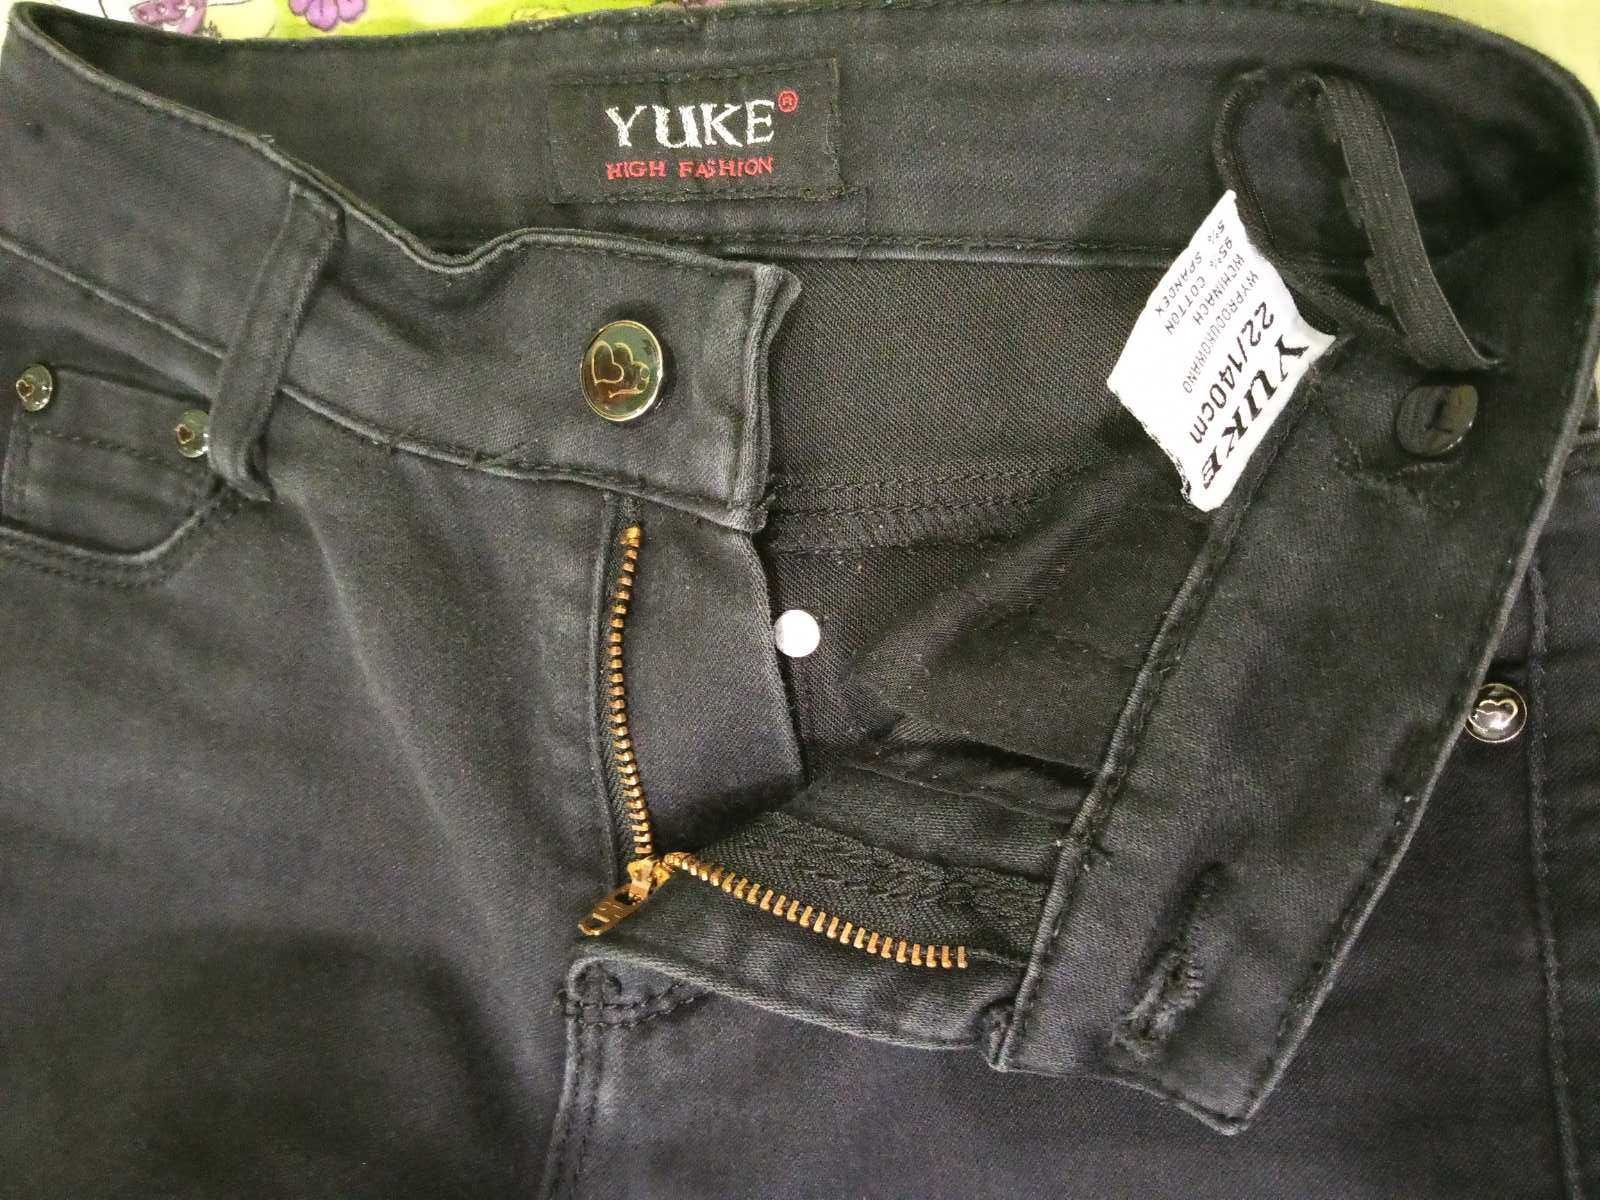 Джинси на 8-10 р.
Yuke Jeans